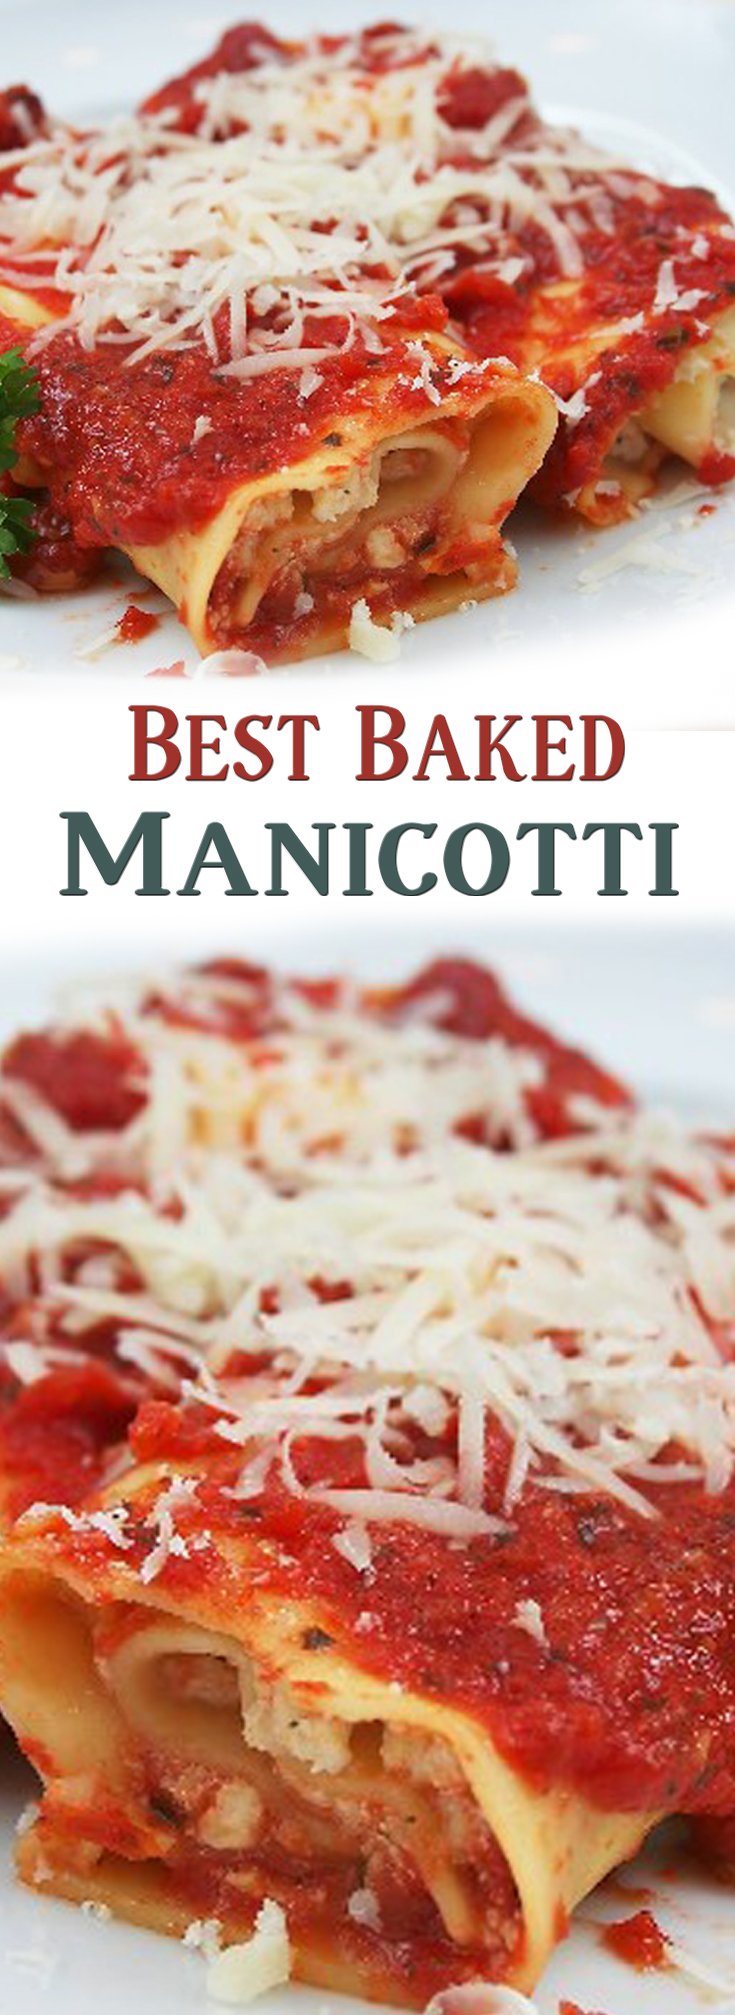 Best Baked Manicotti